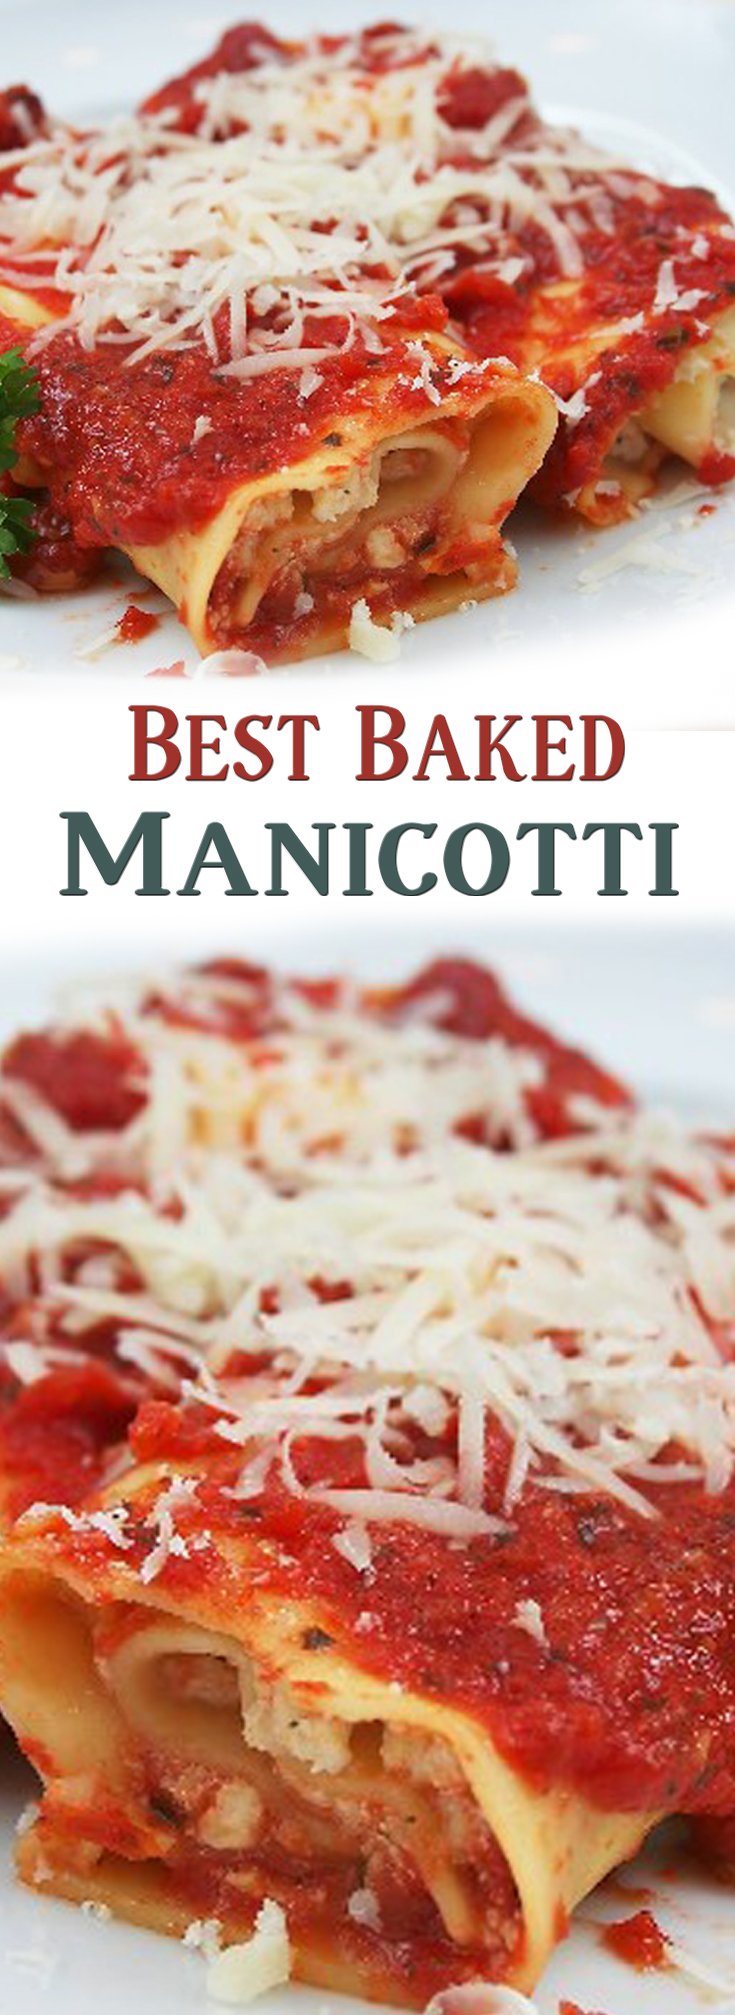 Best Baked Manicotti